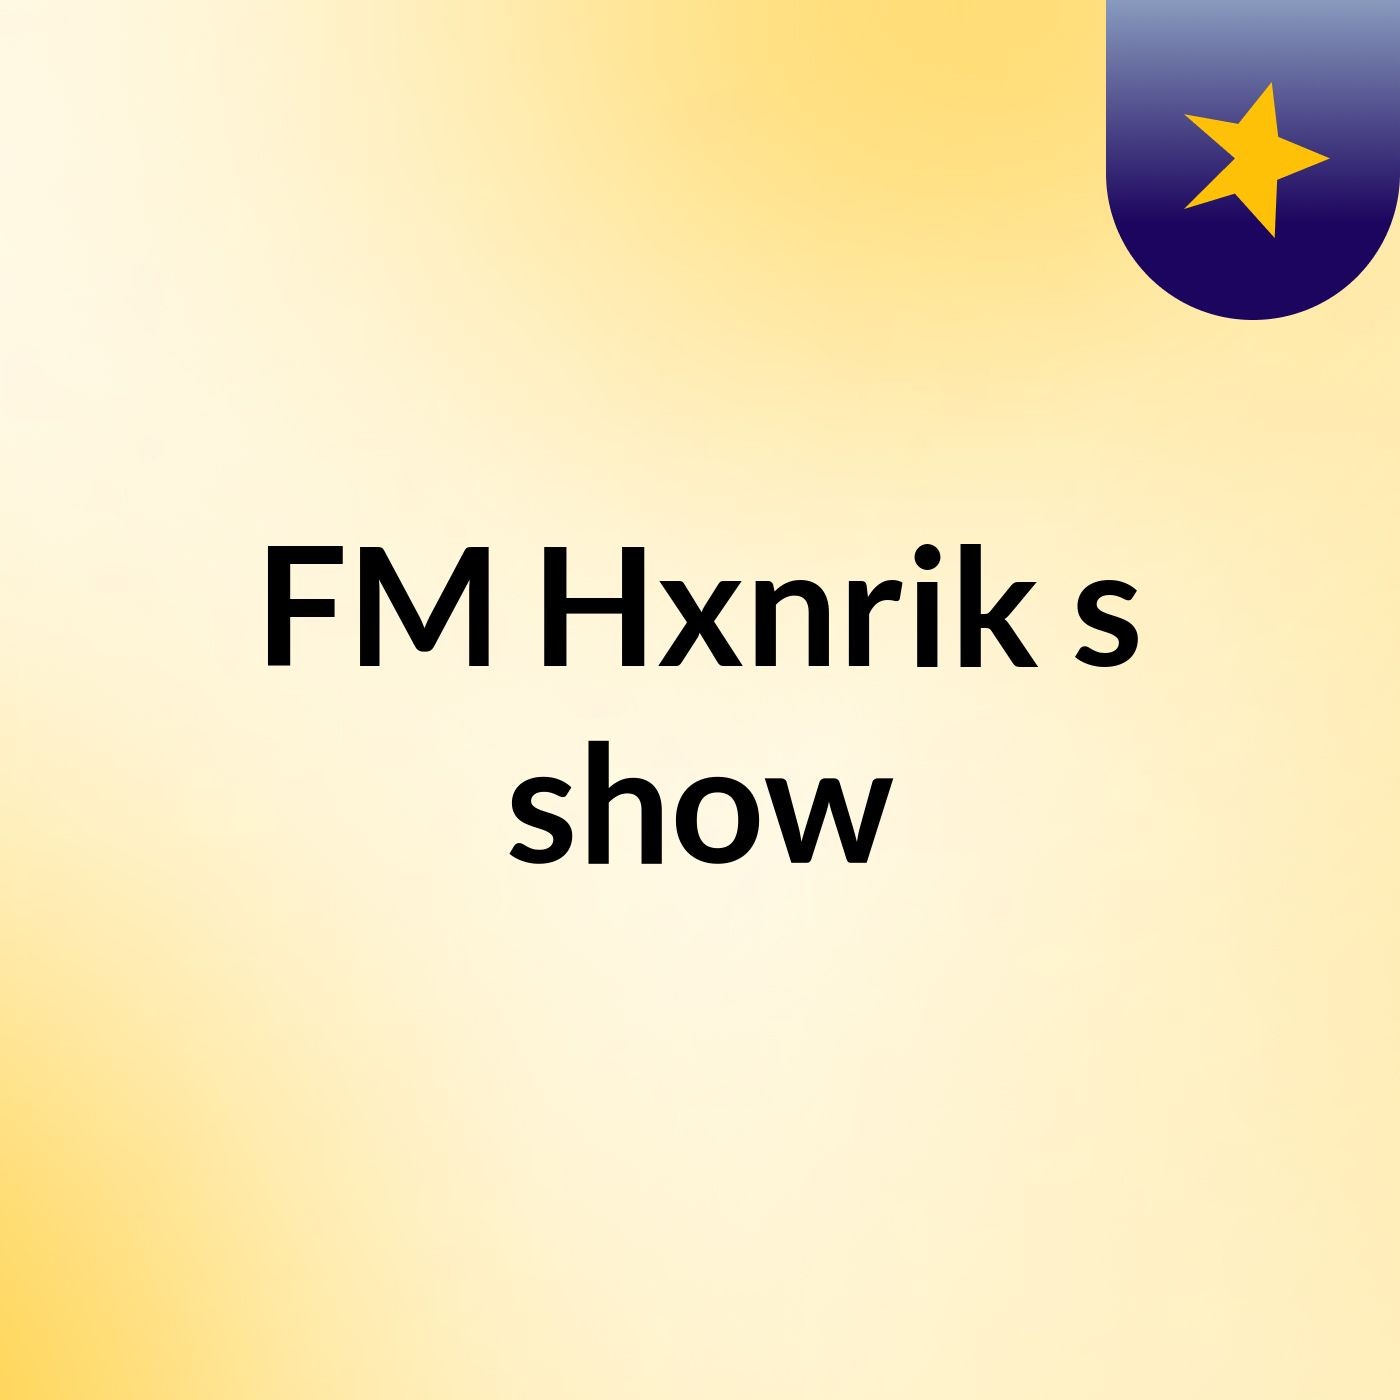 FM Hxnrik's show